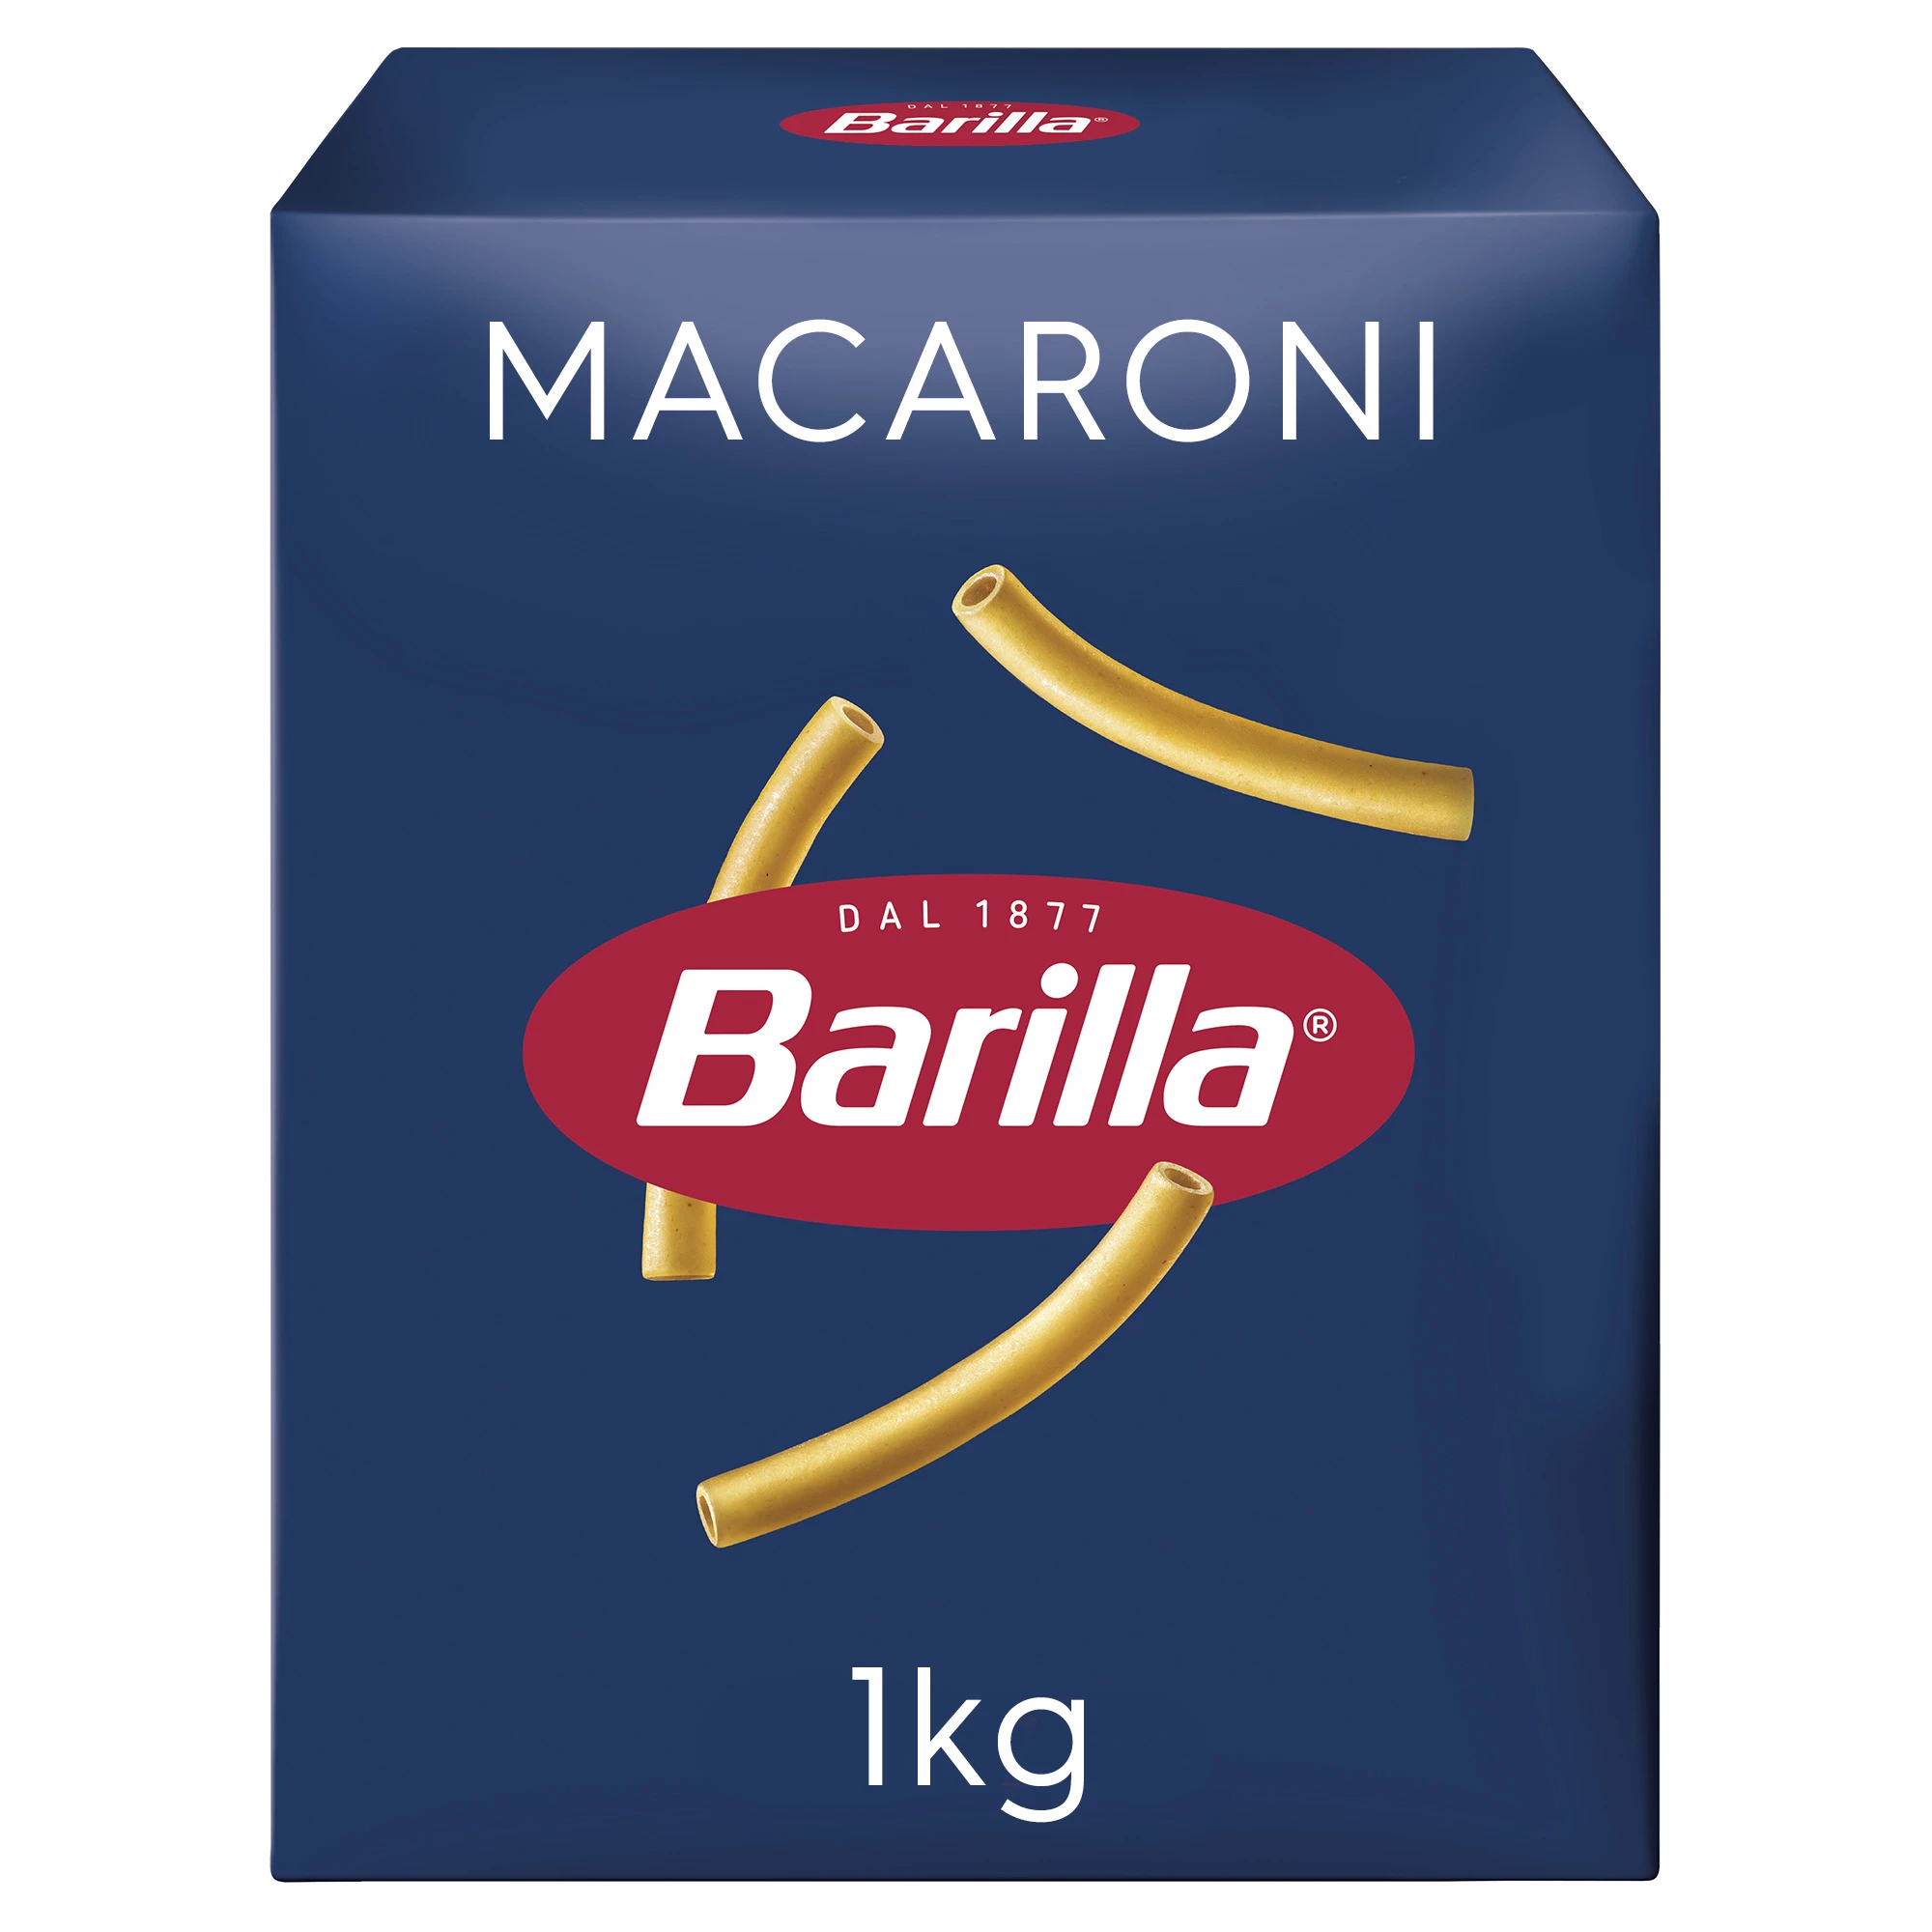 Macaronipasta, 1 kg - BARILLA